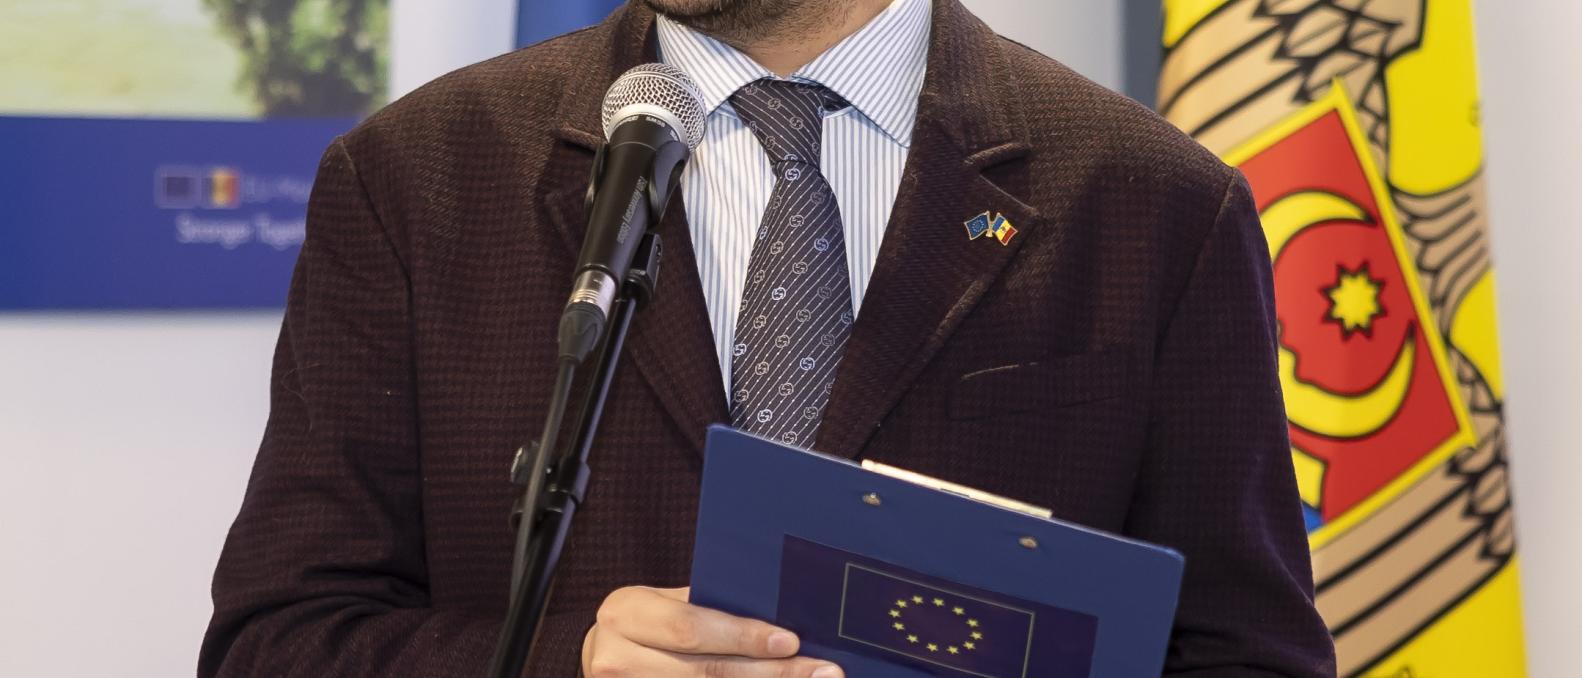 EU anti-disinformation awards 